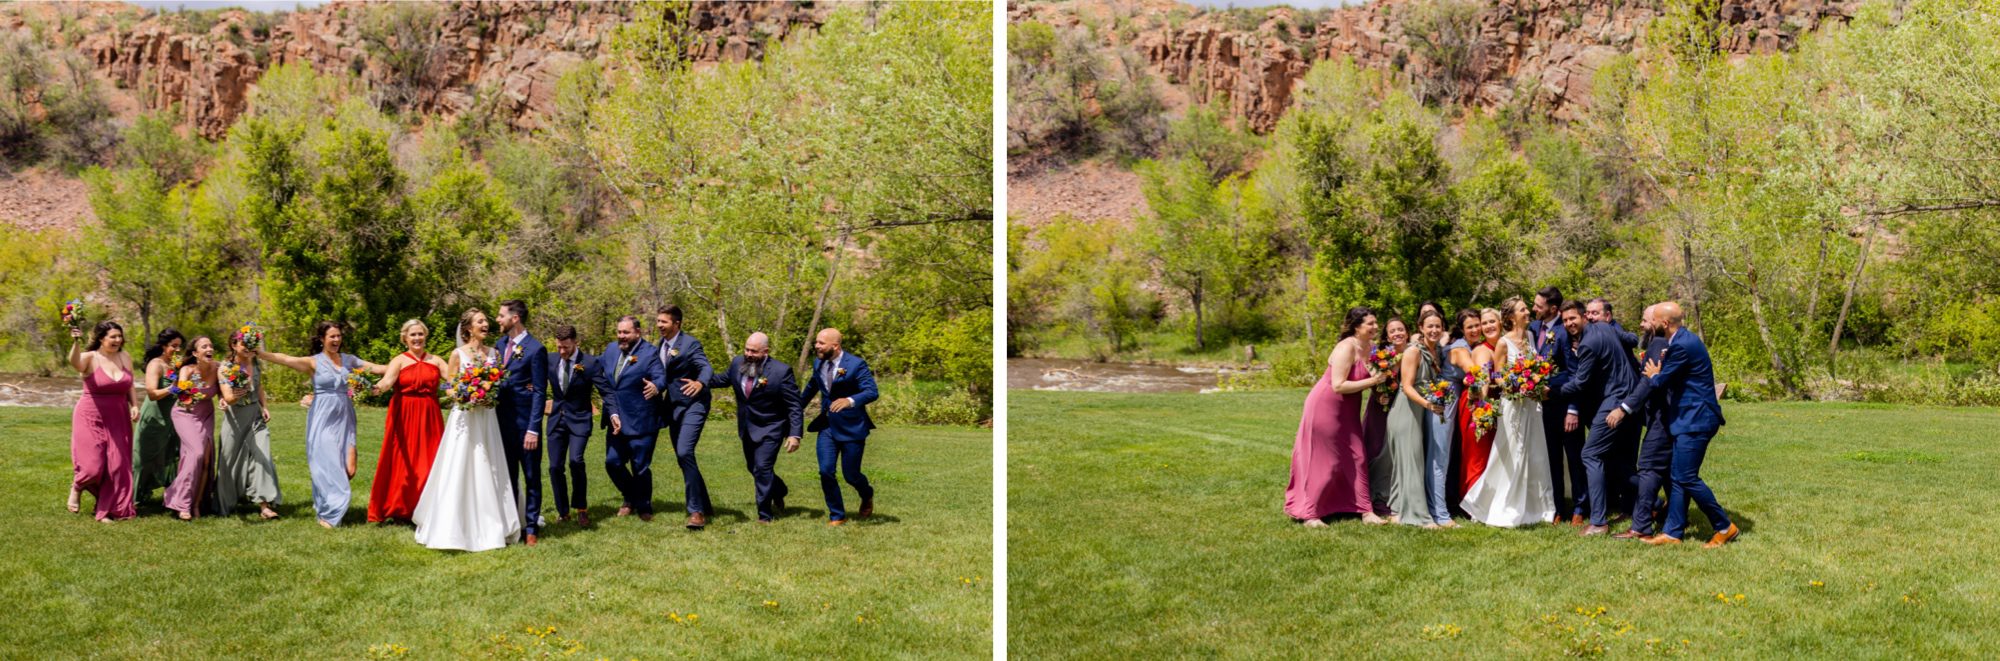 Planet Bluegrass Wedding venue in Lyons Colorado: Colorado Wedding Photographer, Bridesmaids photos, Groomsmen photos, Bridal party photos, Bridesmaids dresses, Groomsmen suits, Wedding flowers